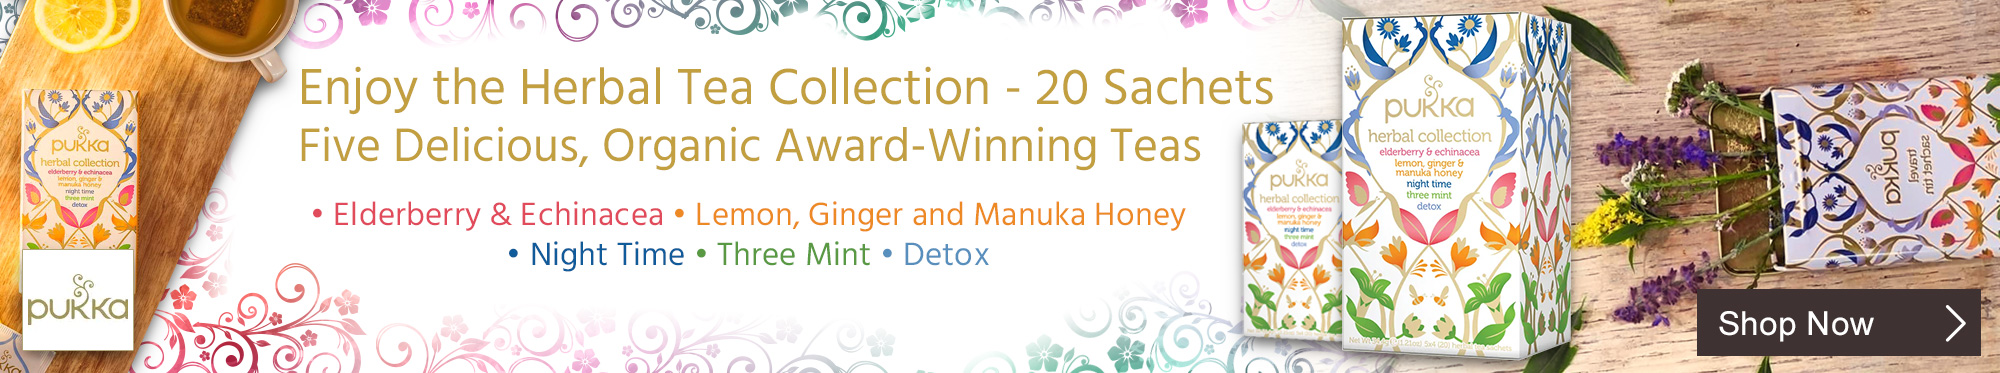 Enjoy Pukka's Herbal Tea Collection 